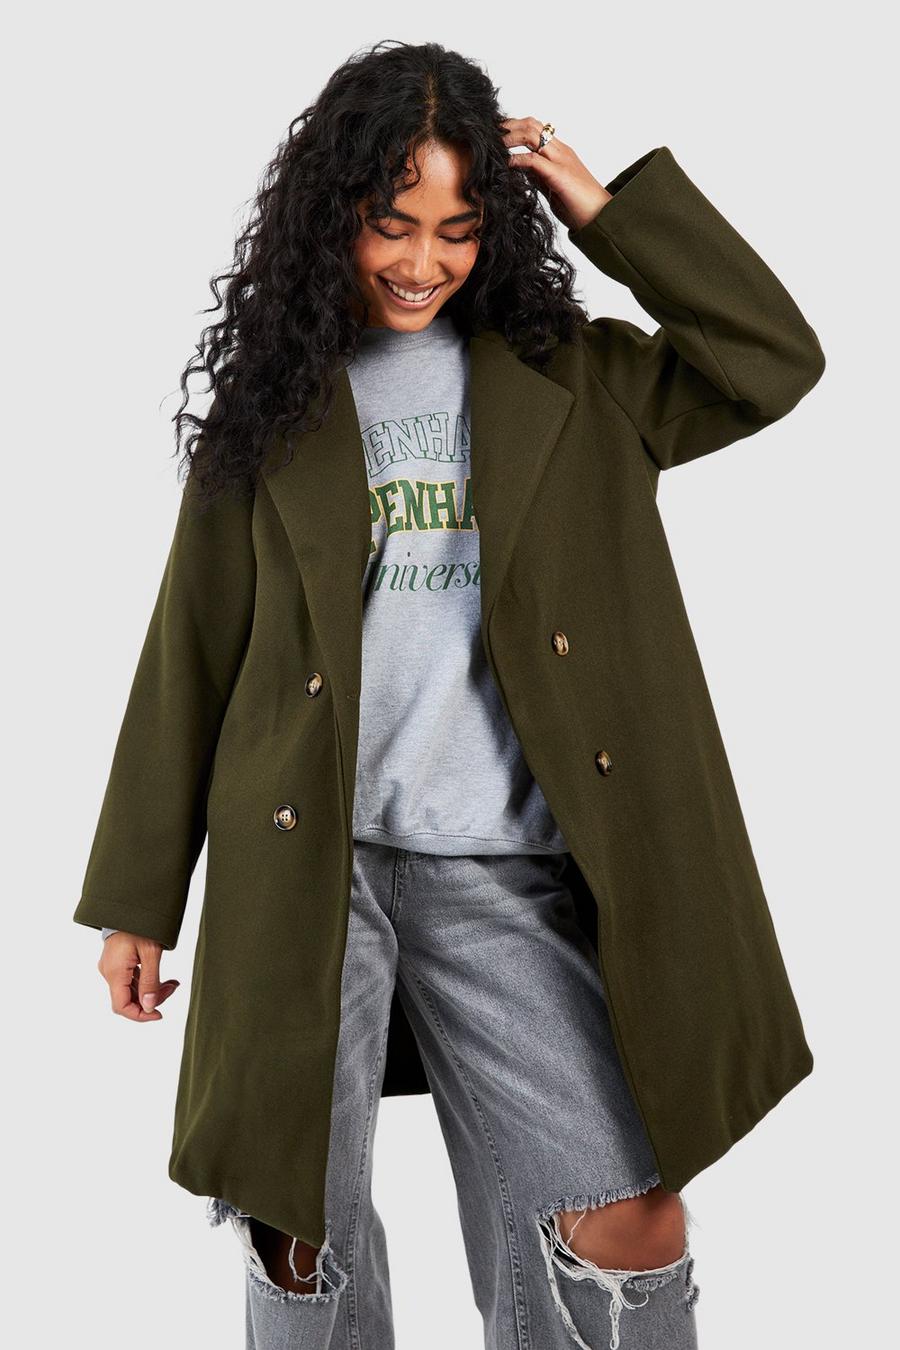 Women's Green Coats & Jackets